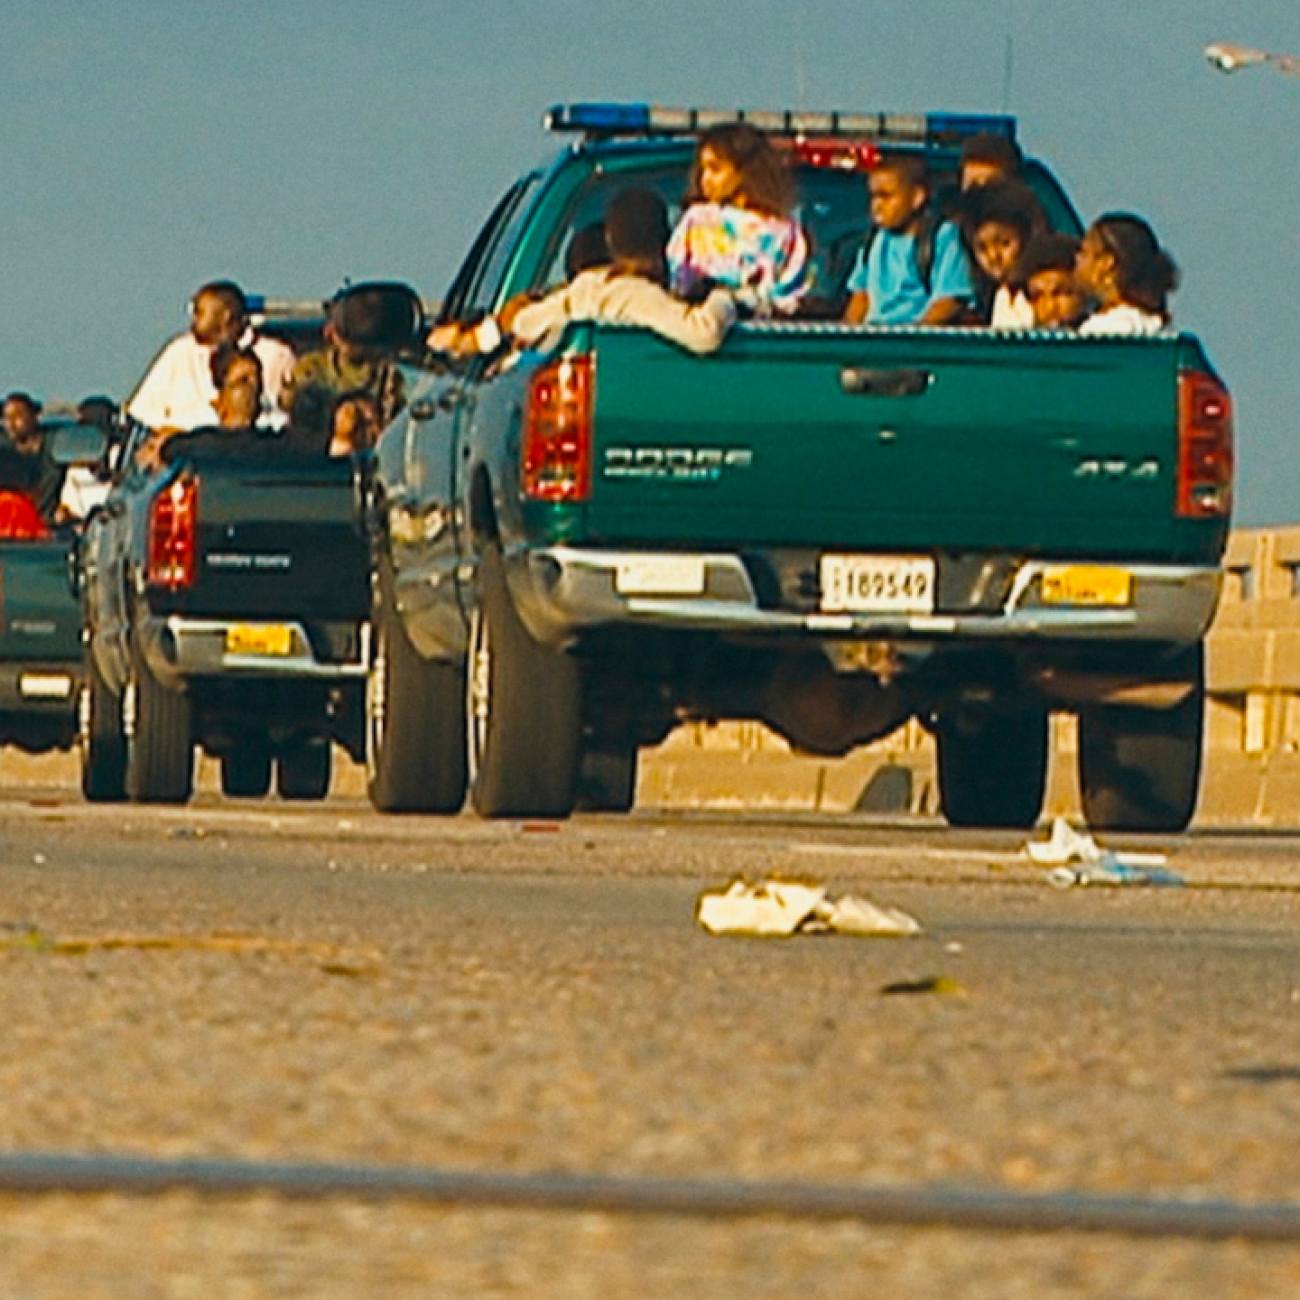 A caravan of green trucks carry child evacuees displaced during Hurricane Katrina